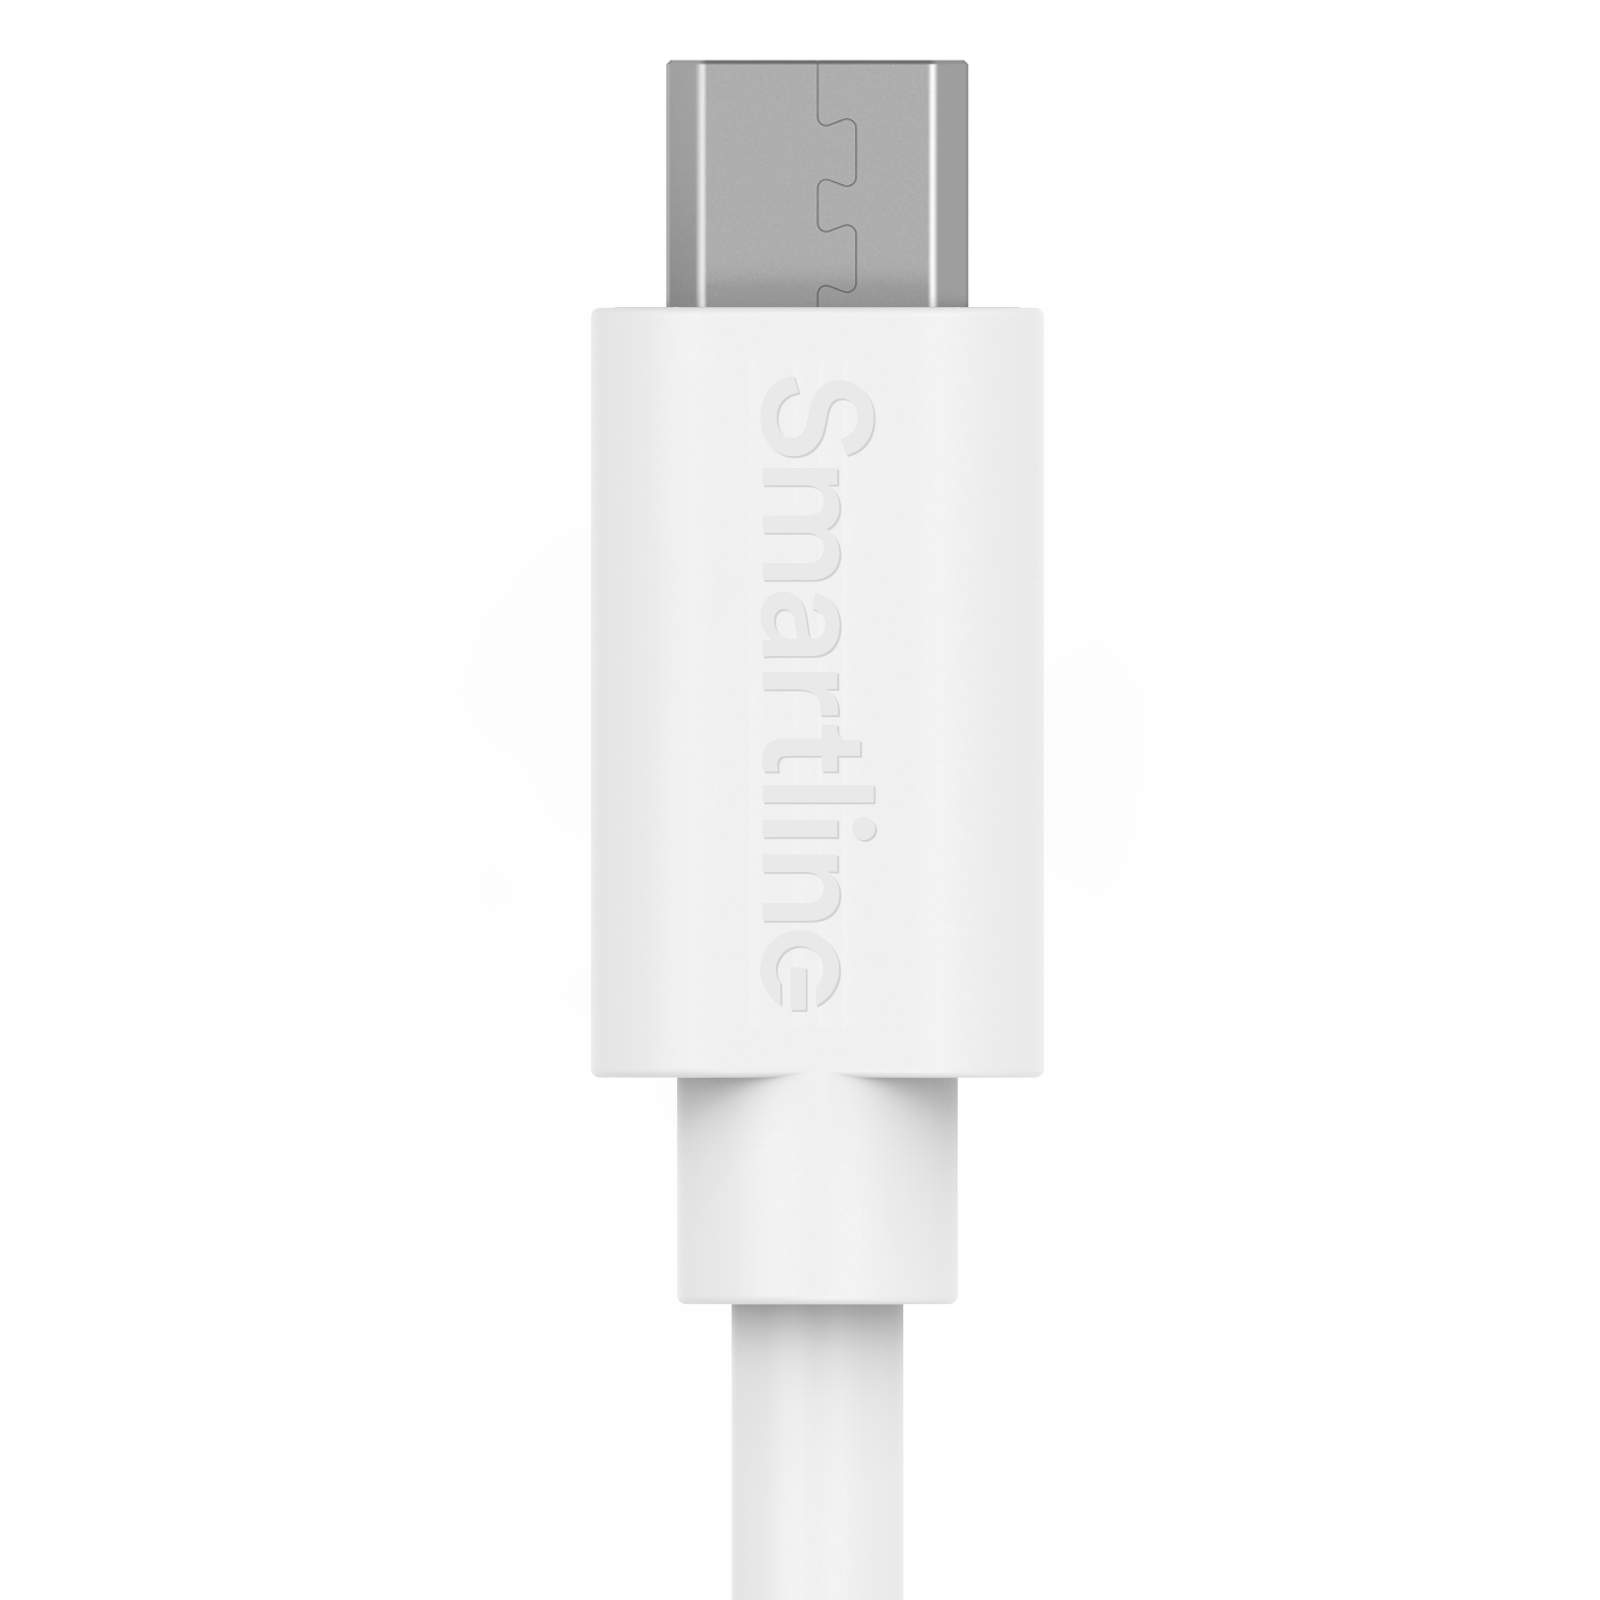 USB Cable MicroUSB 1m valkoinen